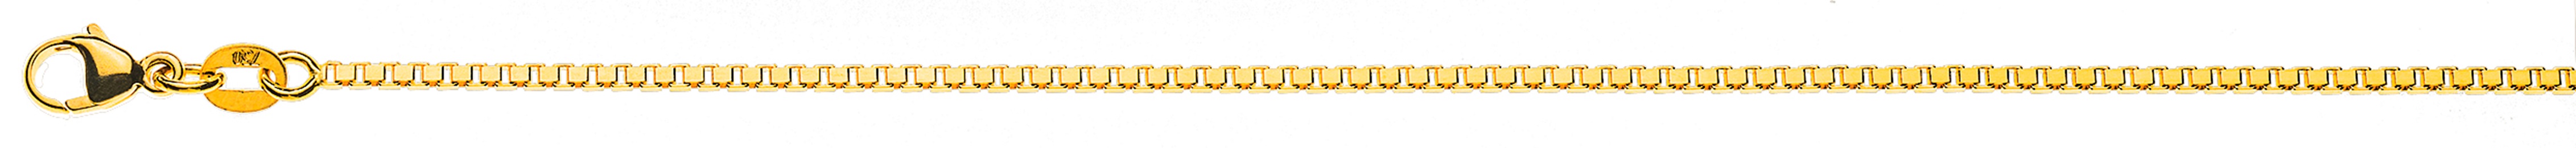 AURONOS Style Necklace yellow gold 9K Venetian chain diamond cut 38cm 1.4mm